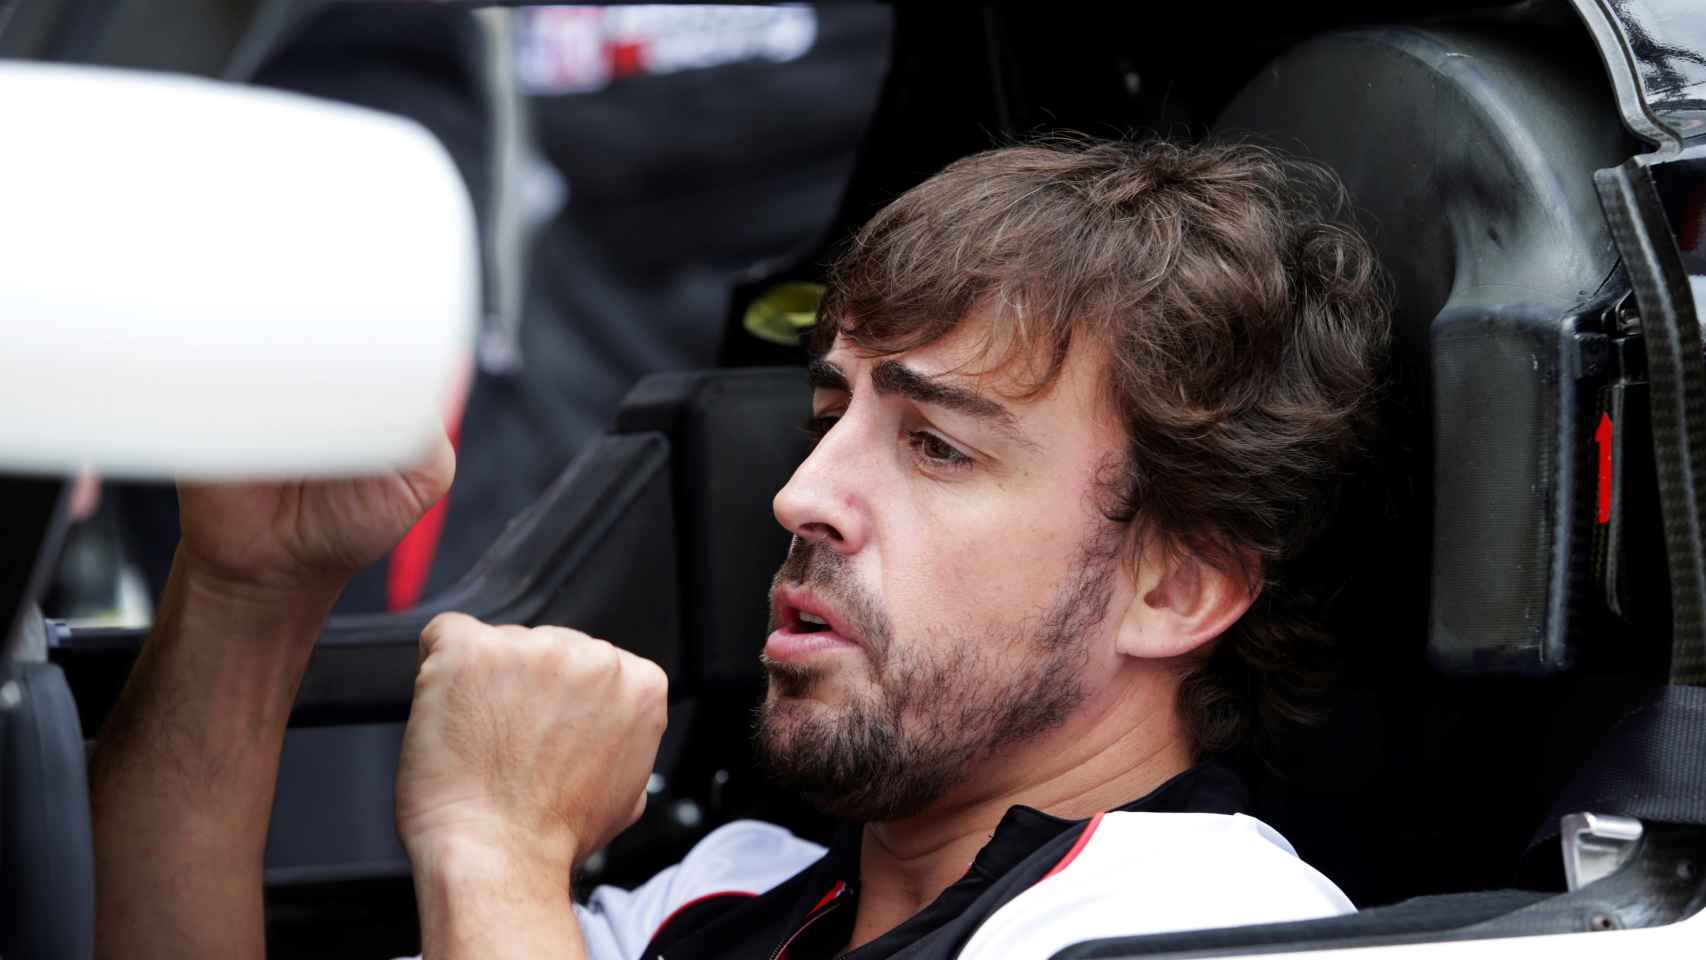 Fernando Alonso, subido en su Toyota.